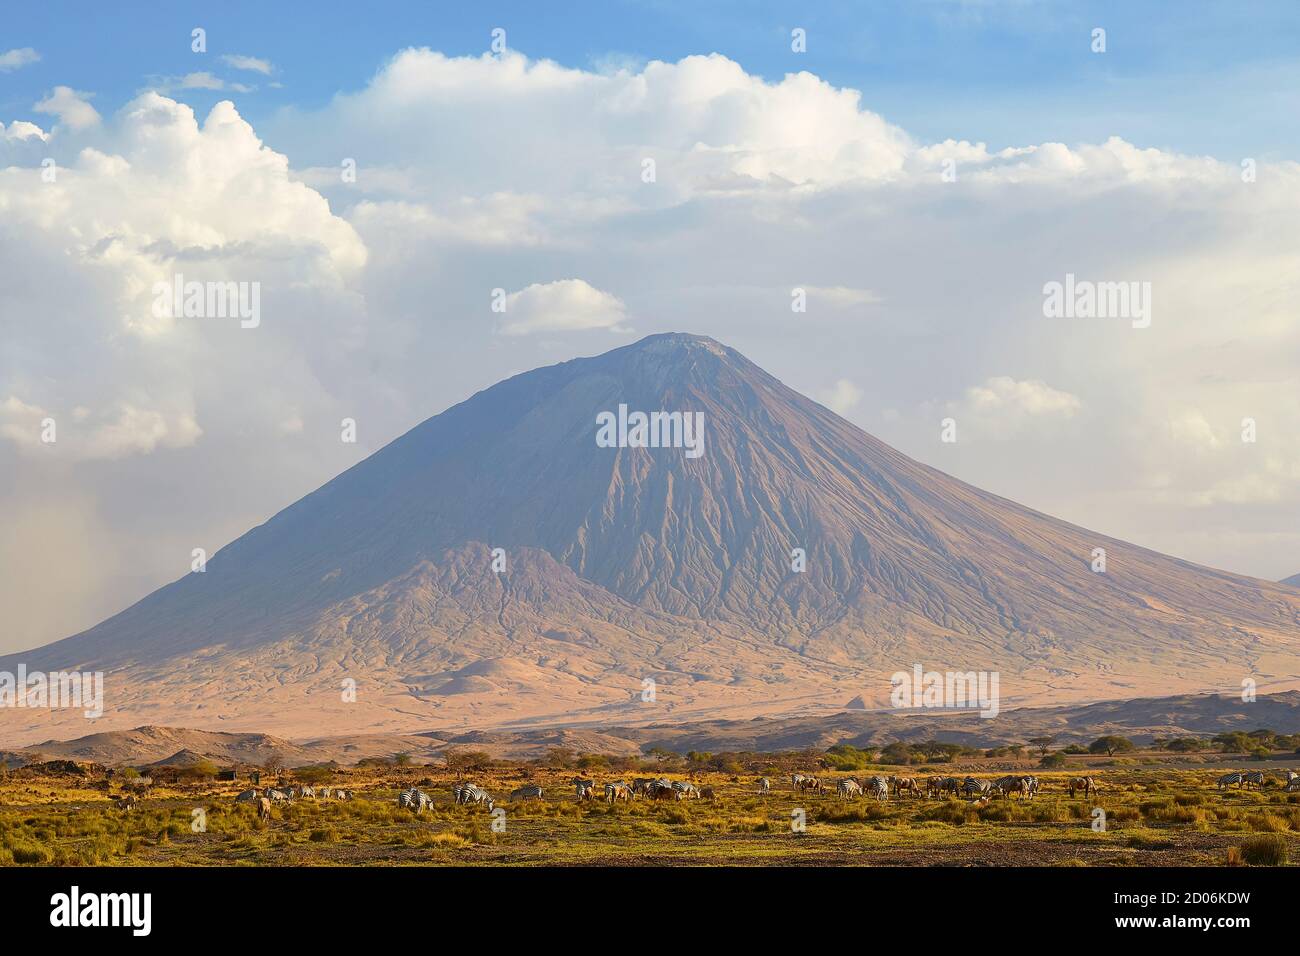 The Ol Doinyo Lengai volcano, also known as the 'Mountain of God', south of Lake Natron, Tanzania, Africa. Stock Photo